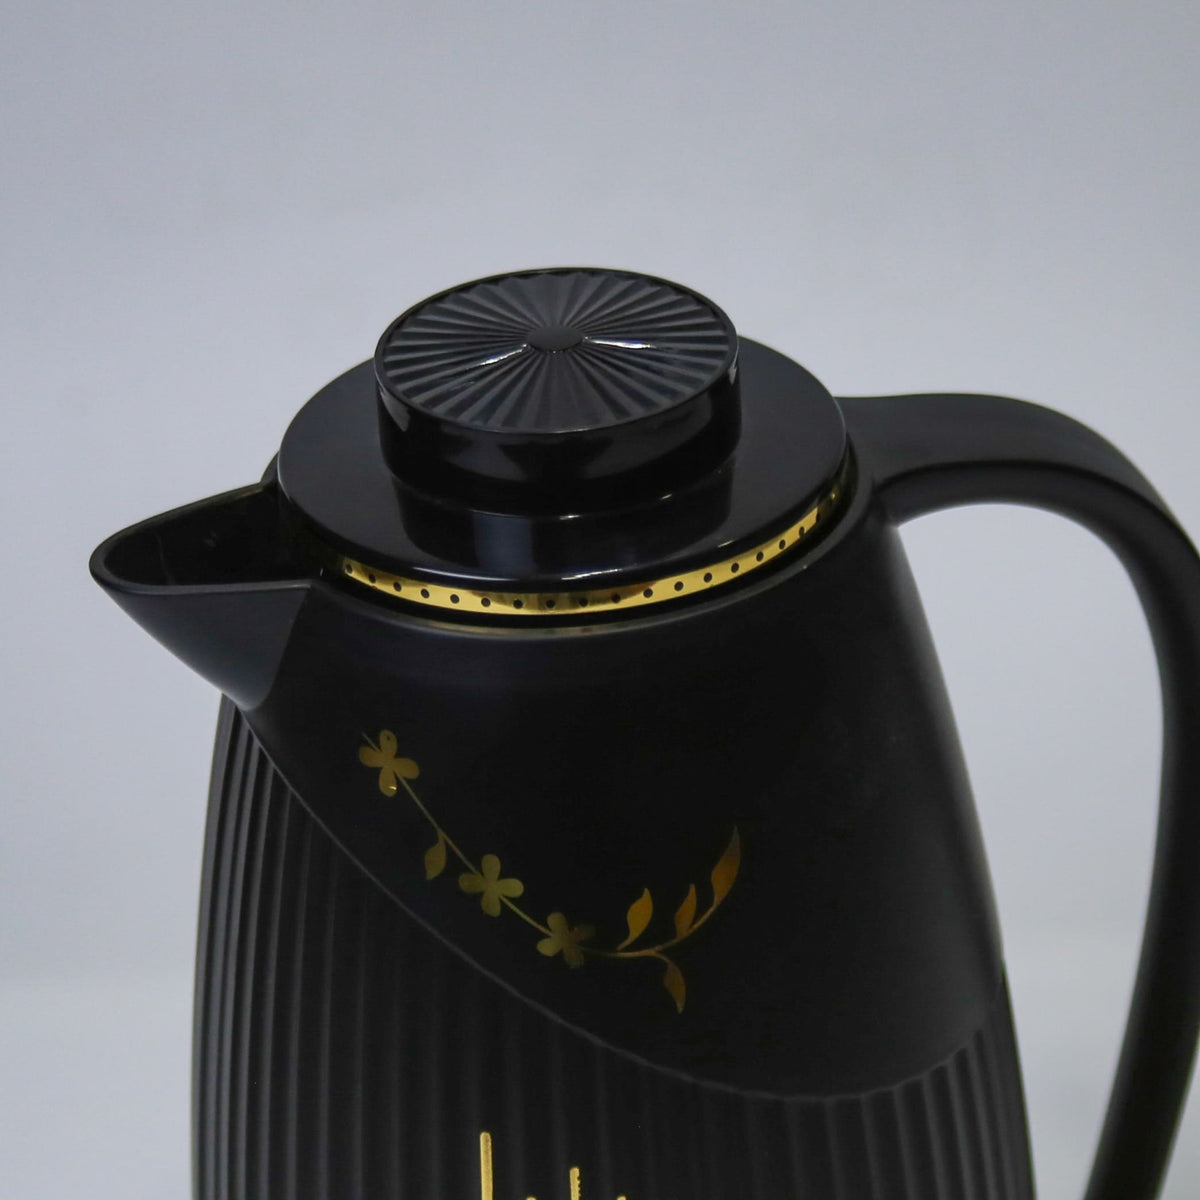 DAYDAYS Vacuum Flask PP body 1.0L White Refill Arabian coffee pot Vacuum Flask thermos